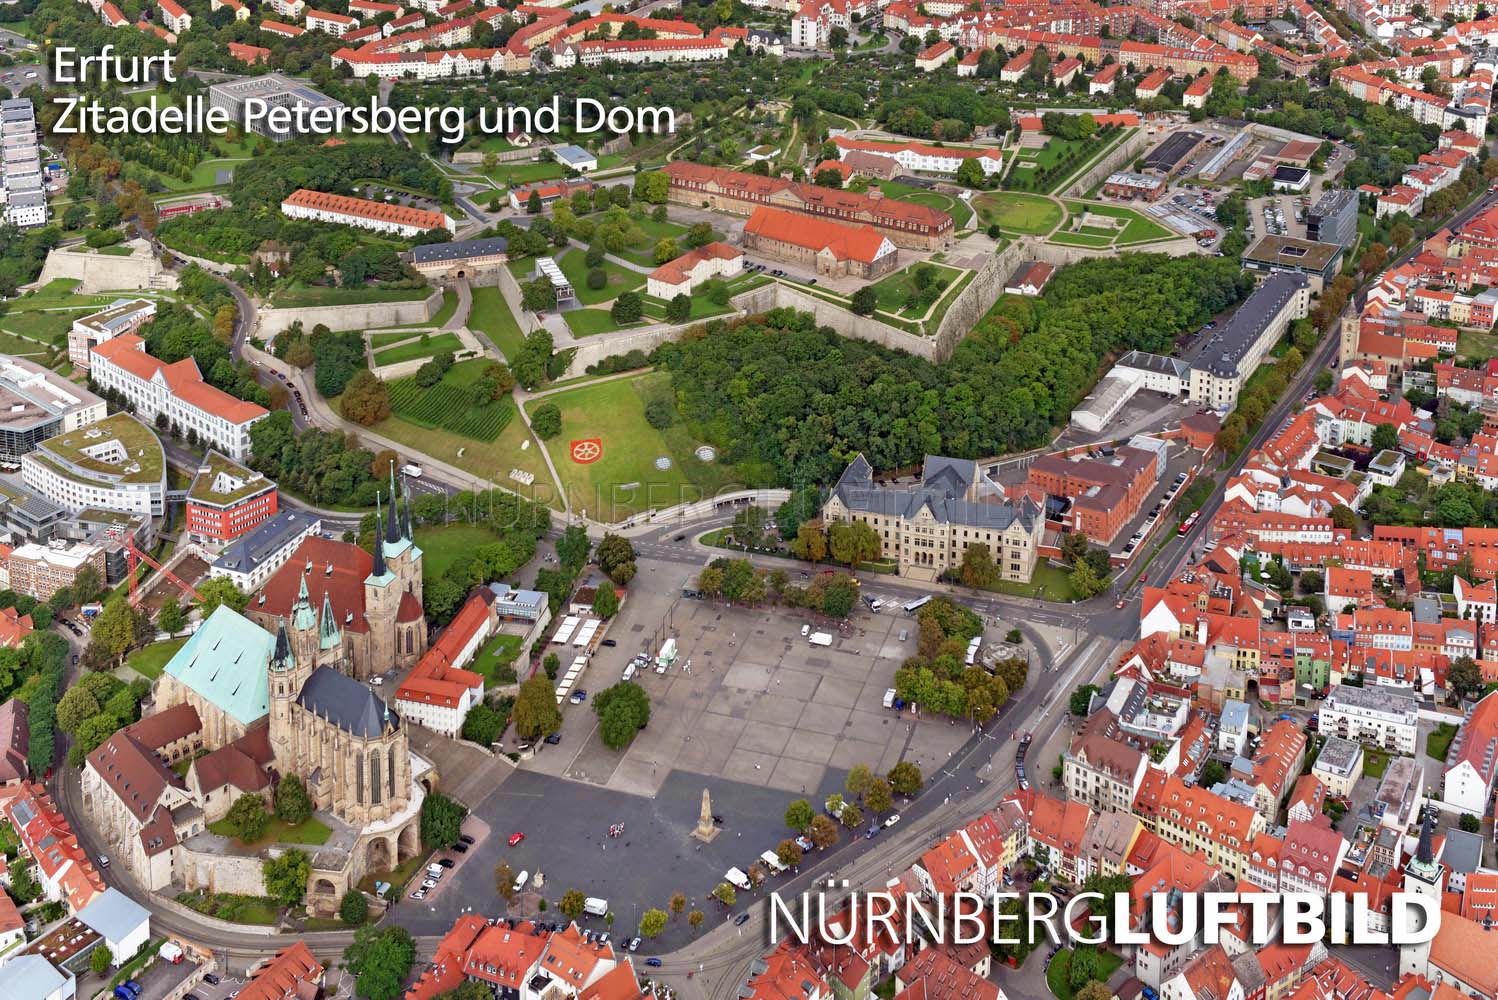 Erfurt, Zitadelle Petersberg und Dom, Luftbild